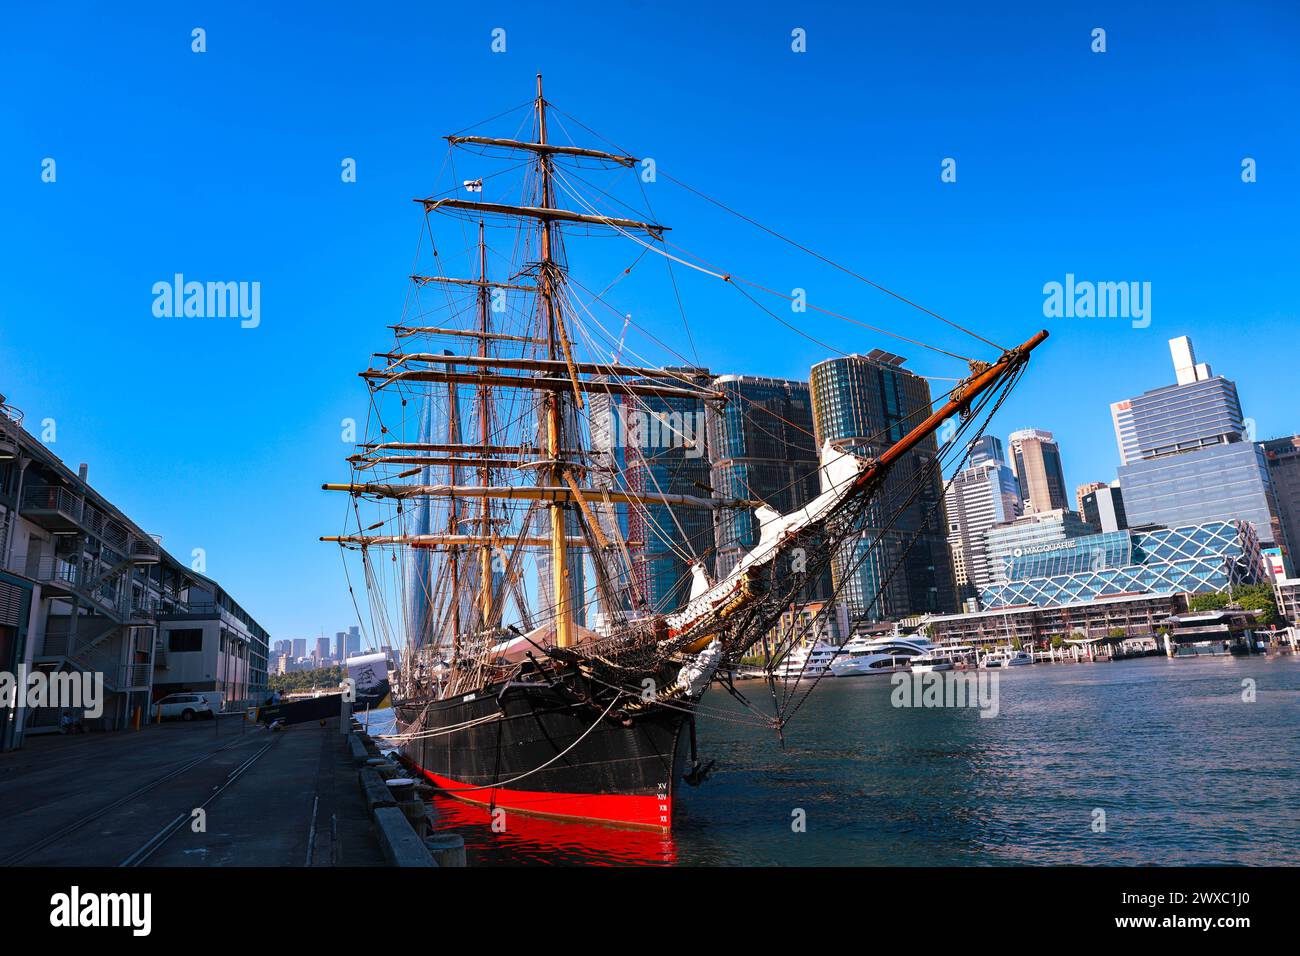 Sydney, Australia - Old sailboat in Sydney Harbor Stock Photo